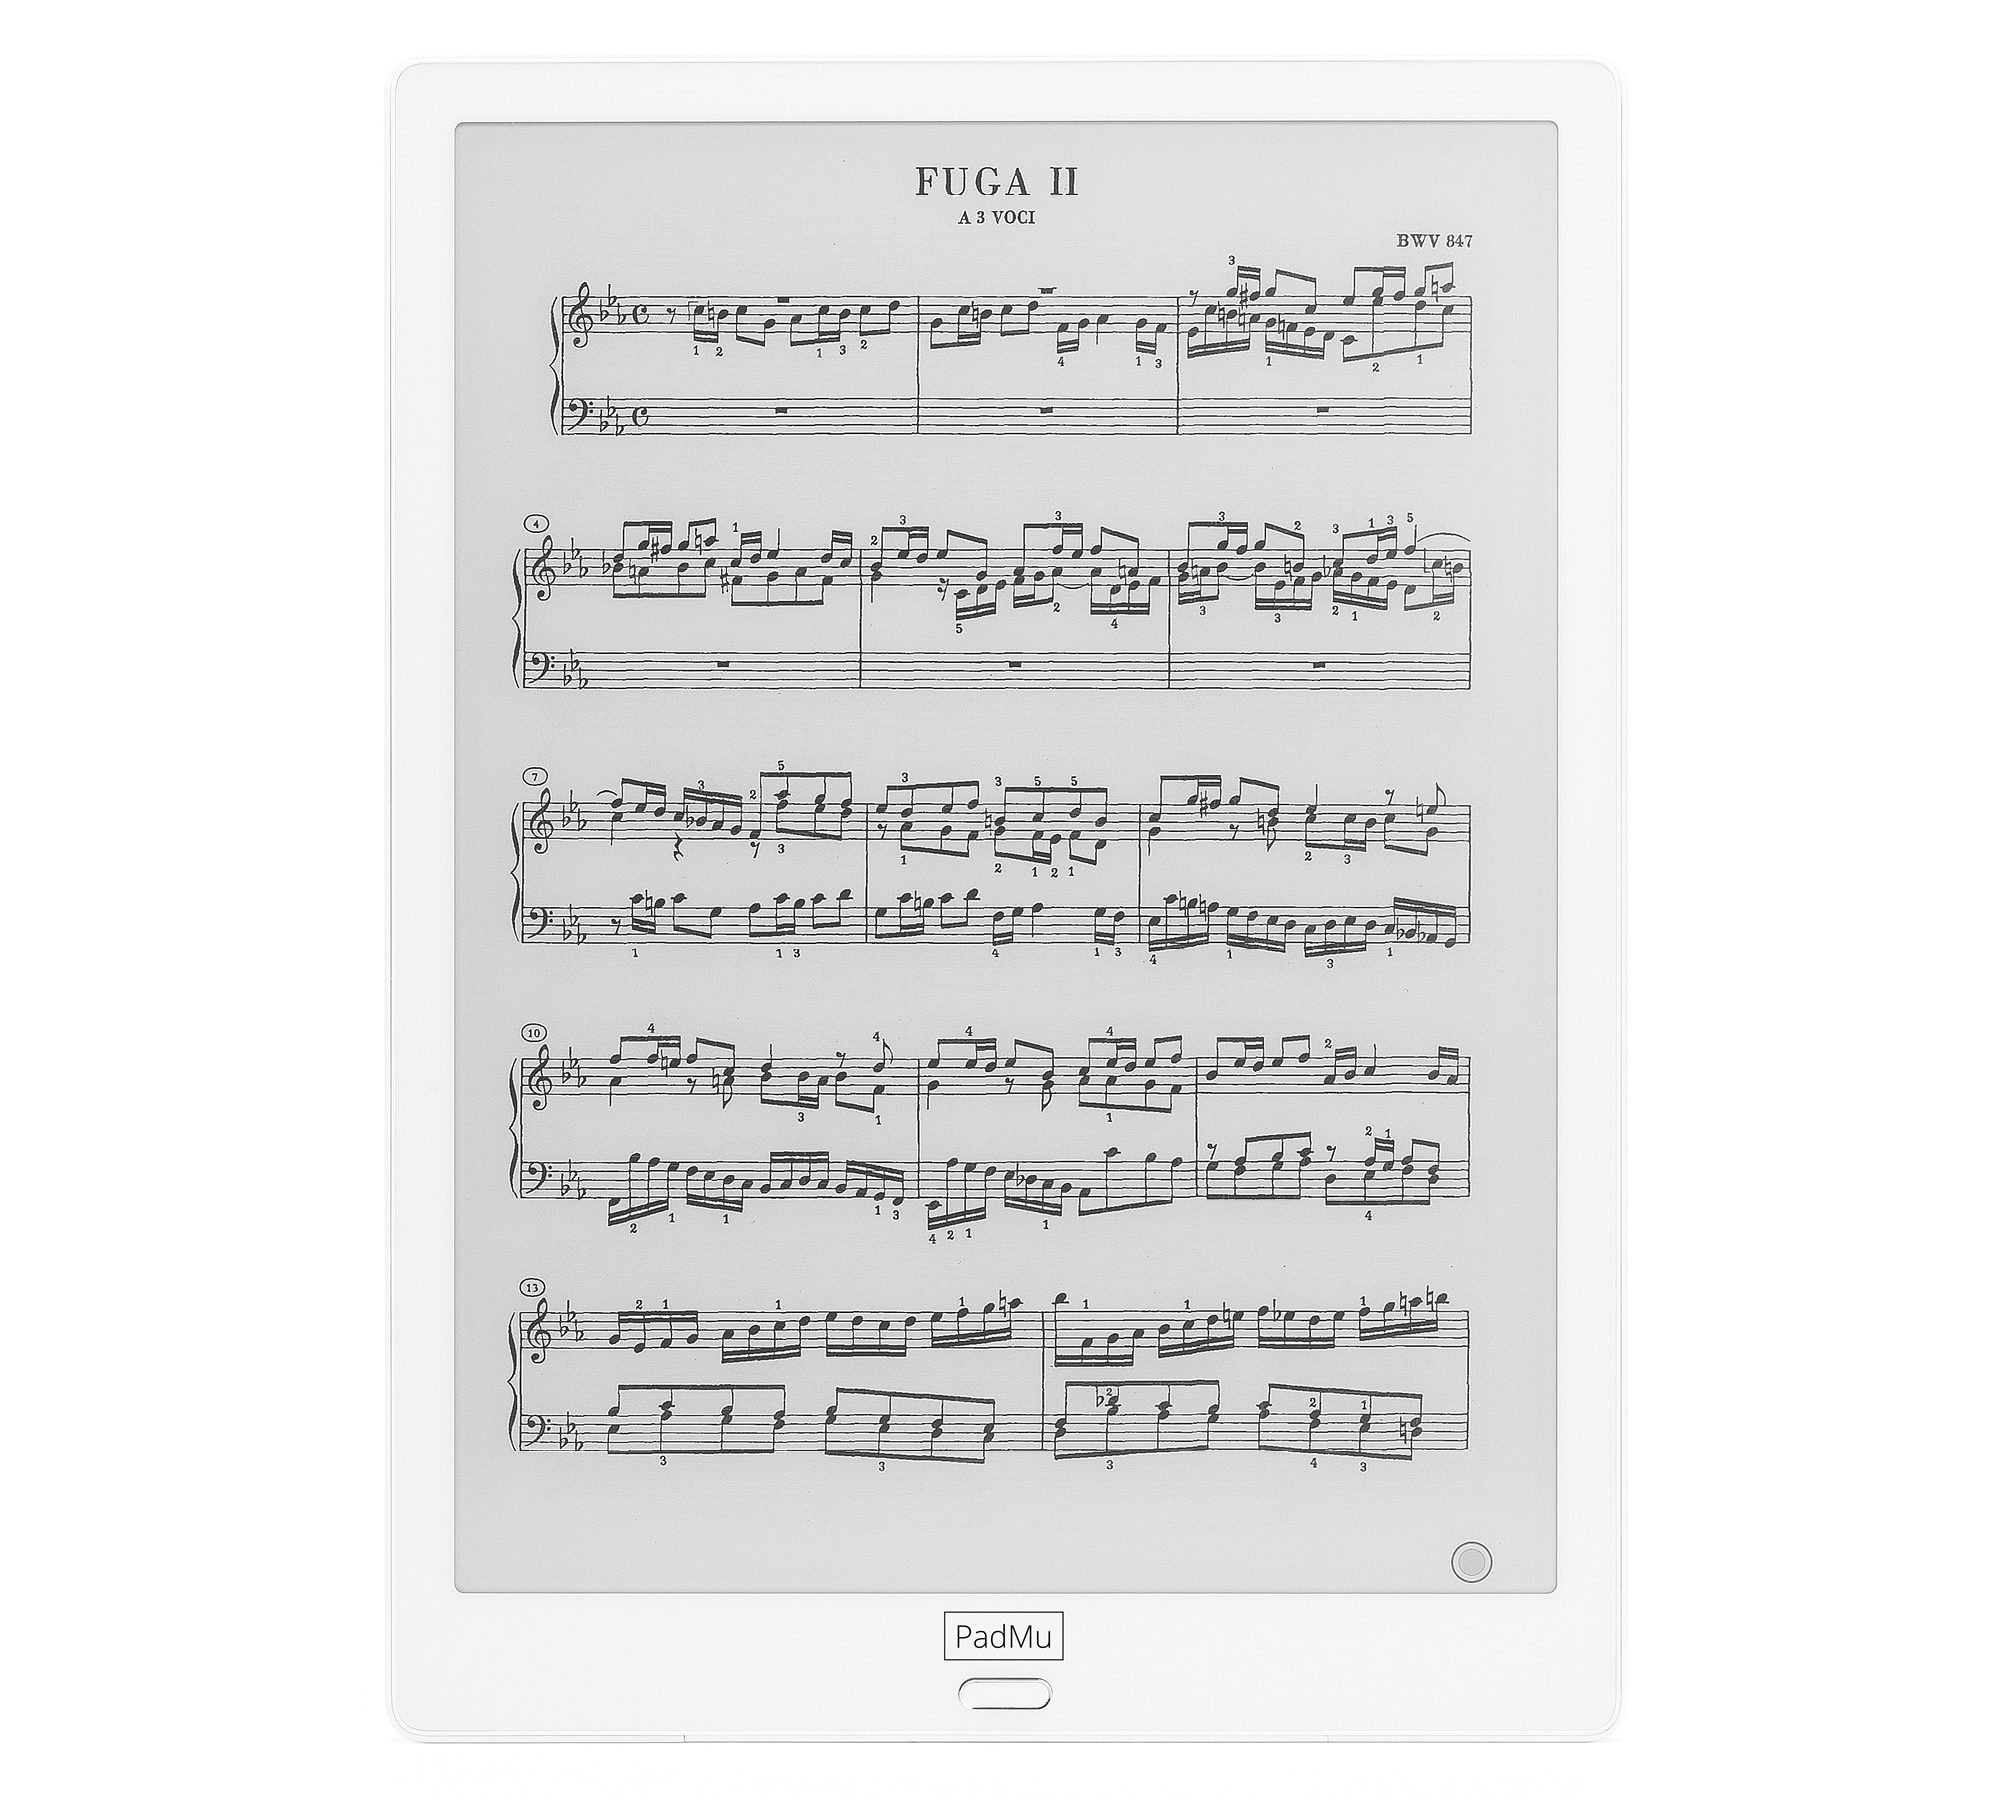 PadForMusicians - A4 (13.3”) e-ink music tablet